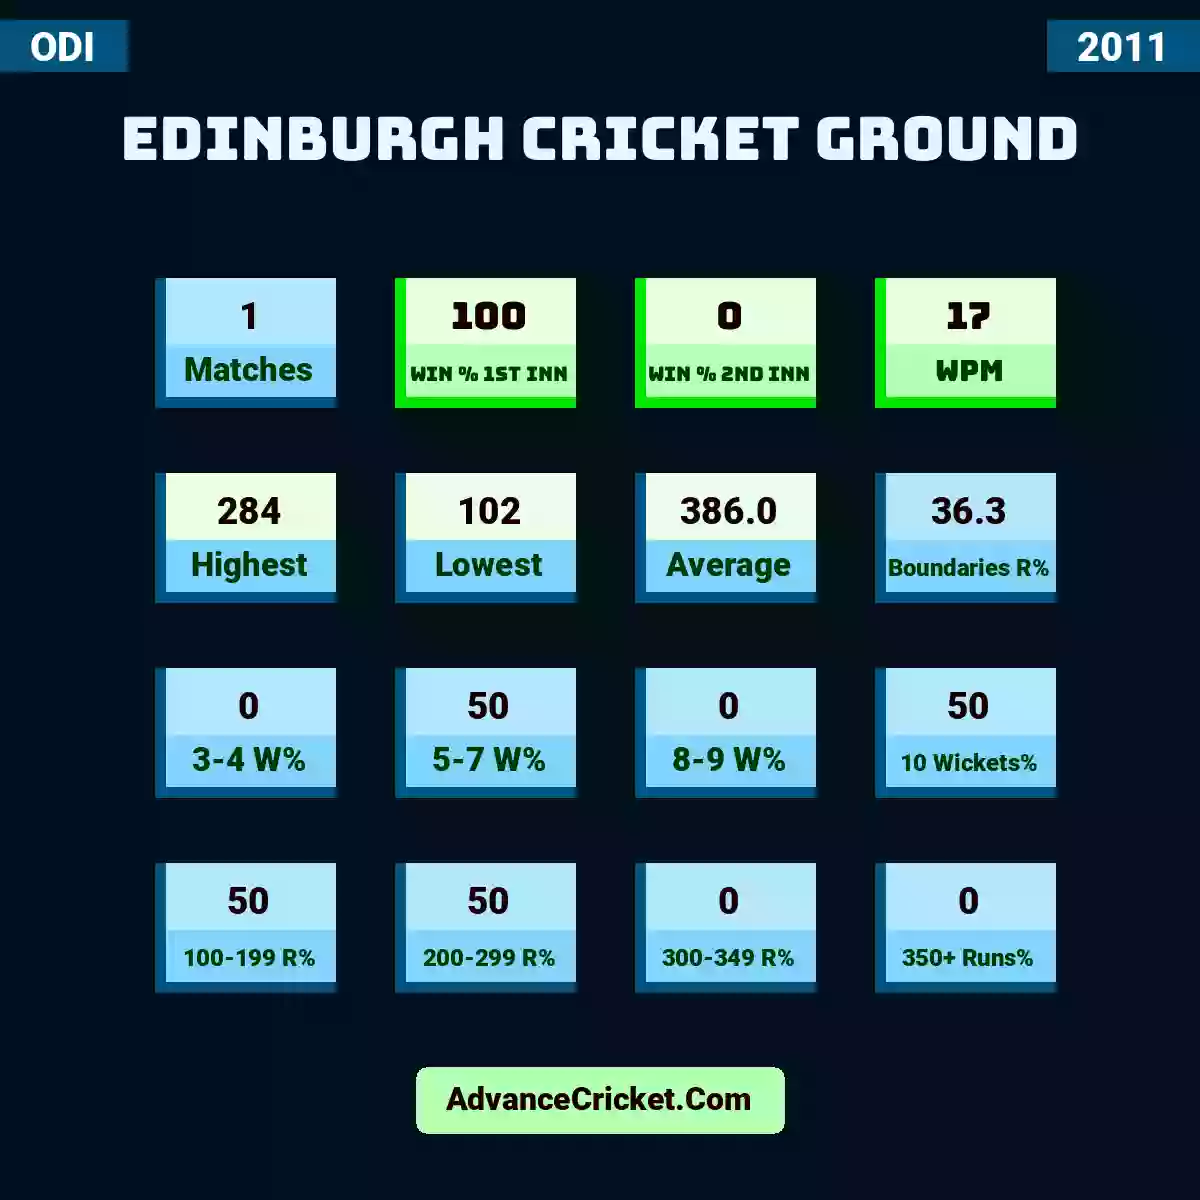 Image showing Edinburgh Cricket Ground with Matches: 1, Win % 1st Inn: 100, Win % 2nd Inn: 0, WPM: 17, Highest: 284, Lowest: 102, Average: 386.0, Boundaries R%: 36.3, 3-4 W%: 0, 5-7 W%: 50, 8-9 W%: 0, 10 Wickets%: 50, 100-199 R%: 50, 200-299 R%: 50, 300-349 R%: 0, 350+ Runs%: 0.